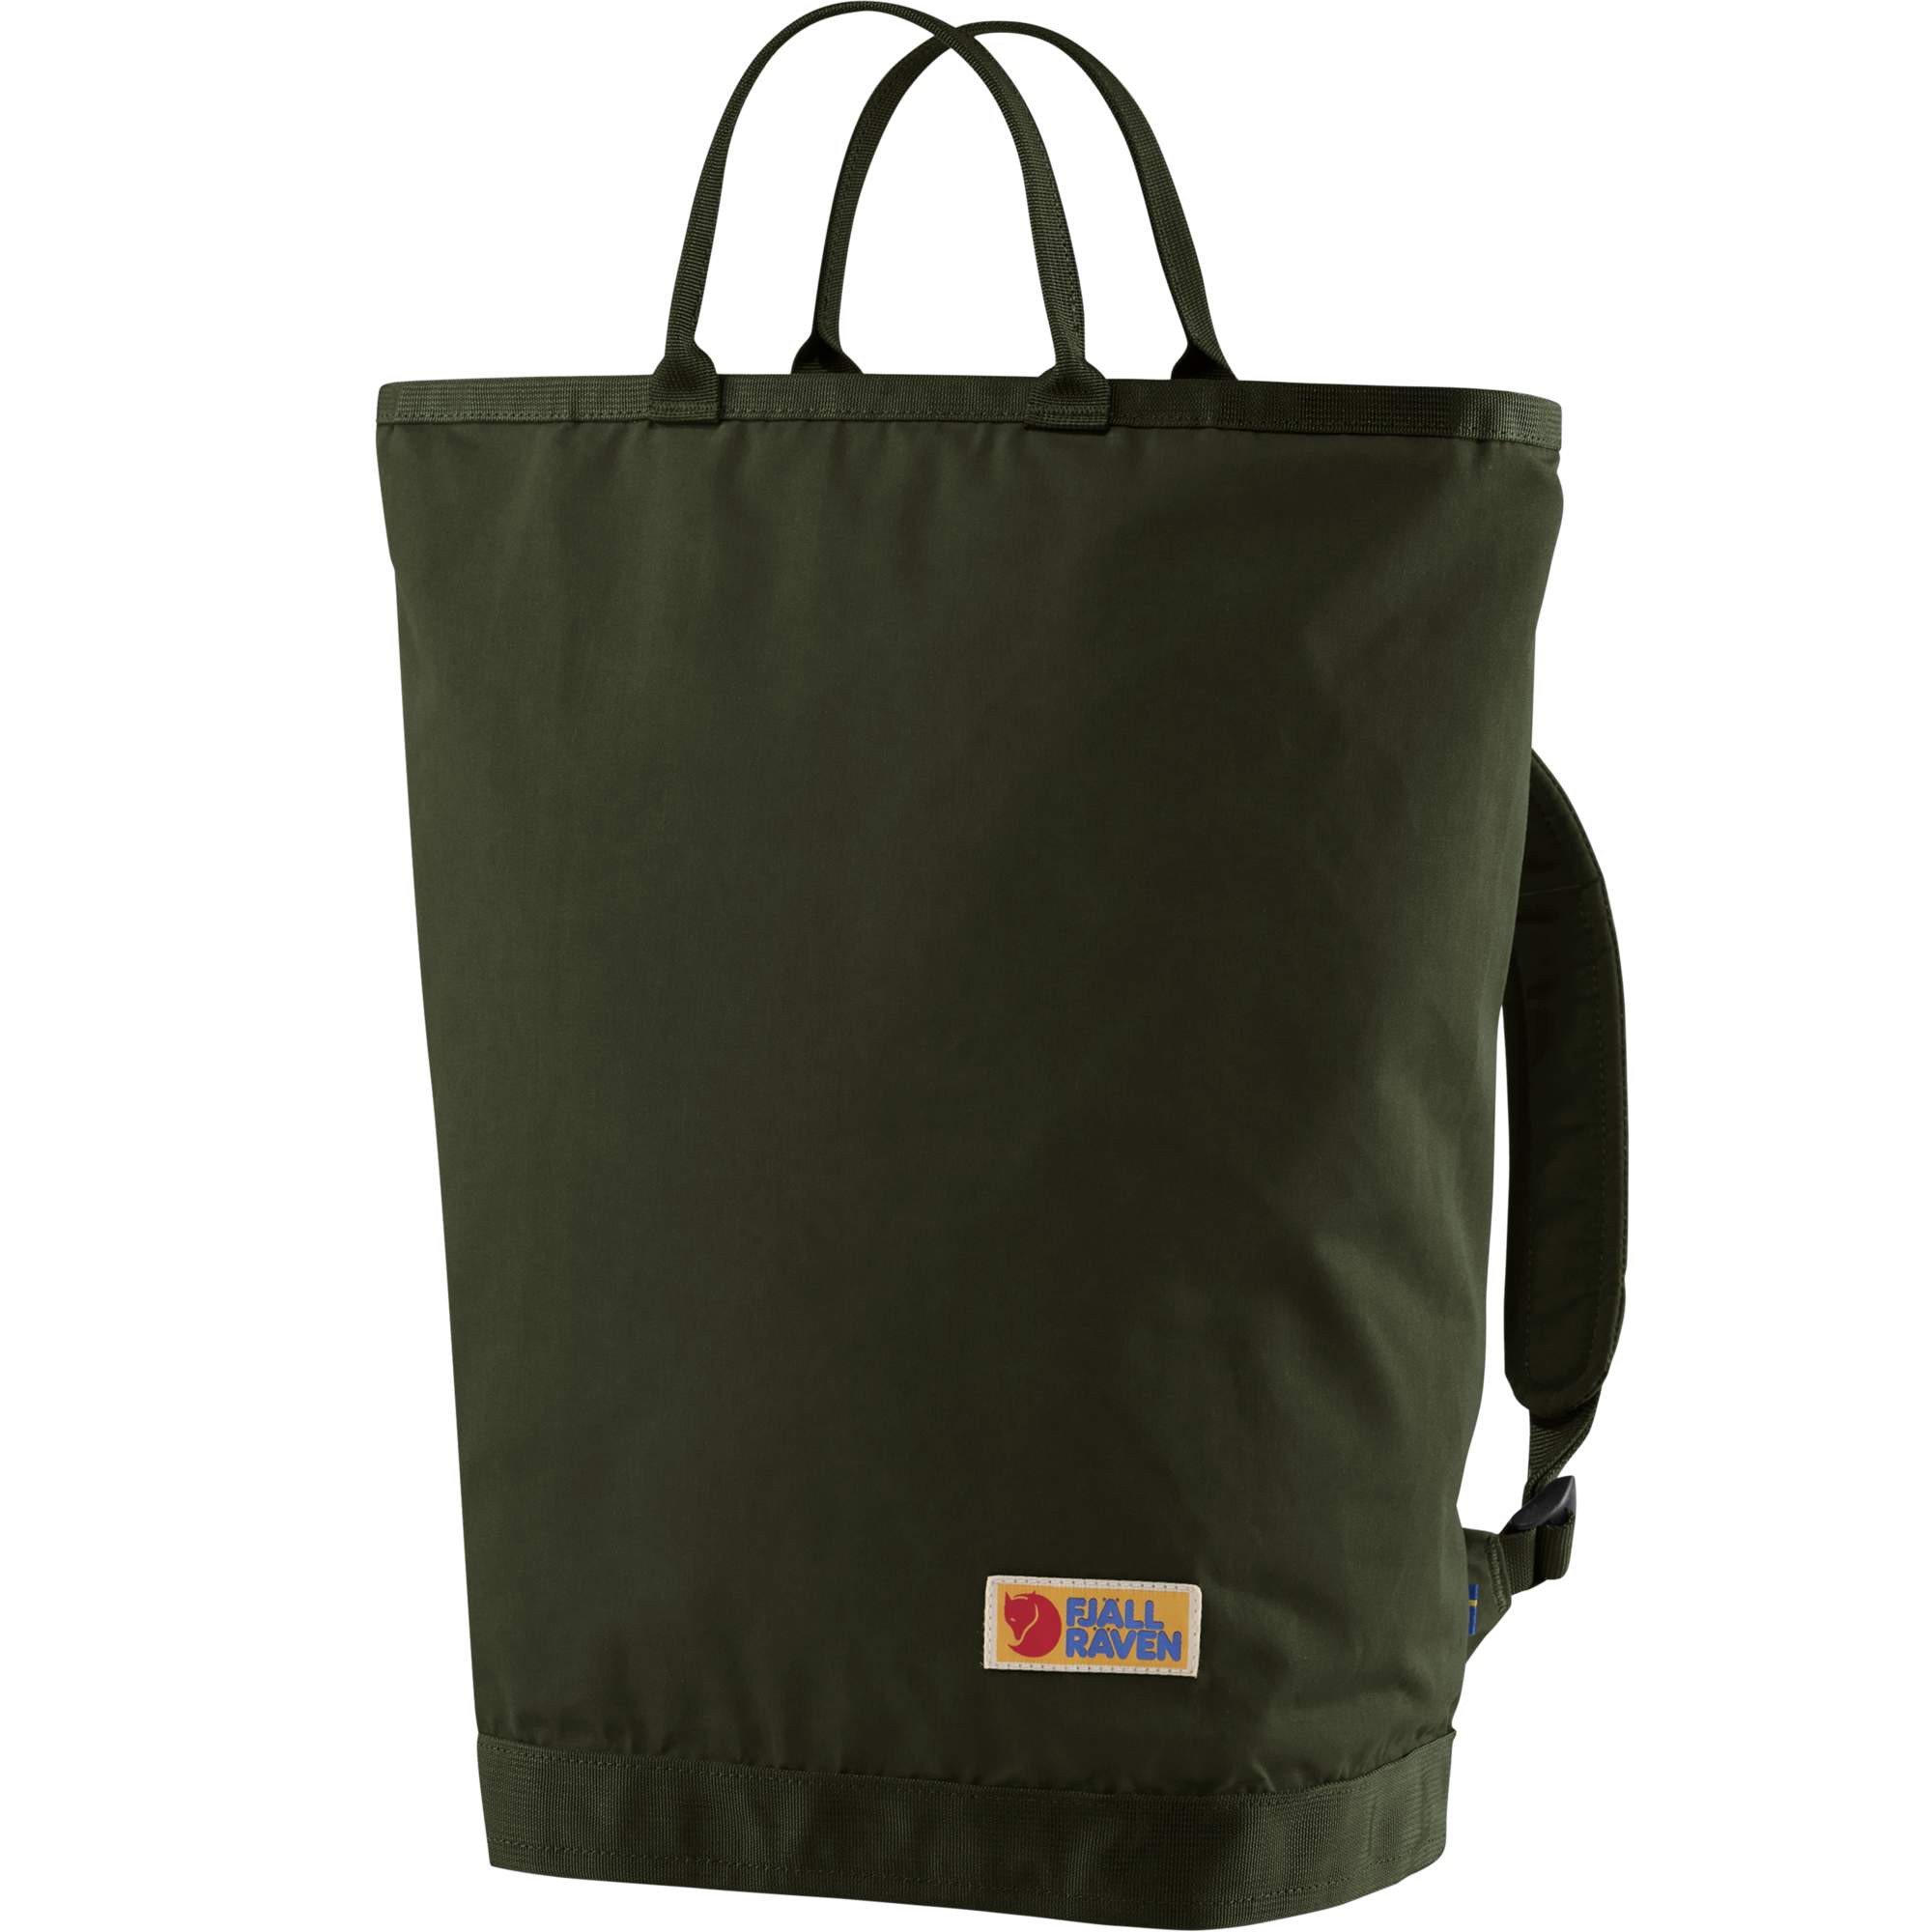 Bag/backpack